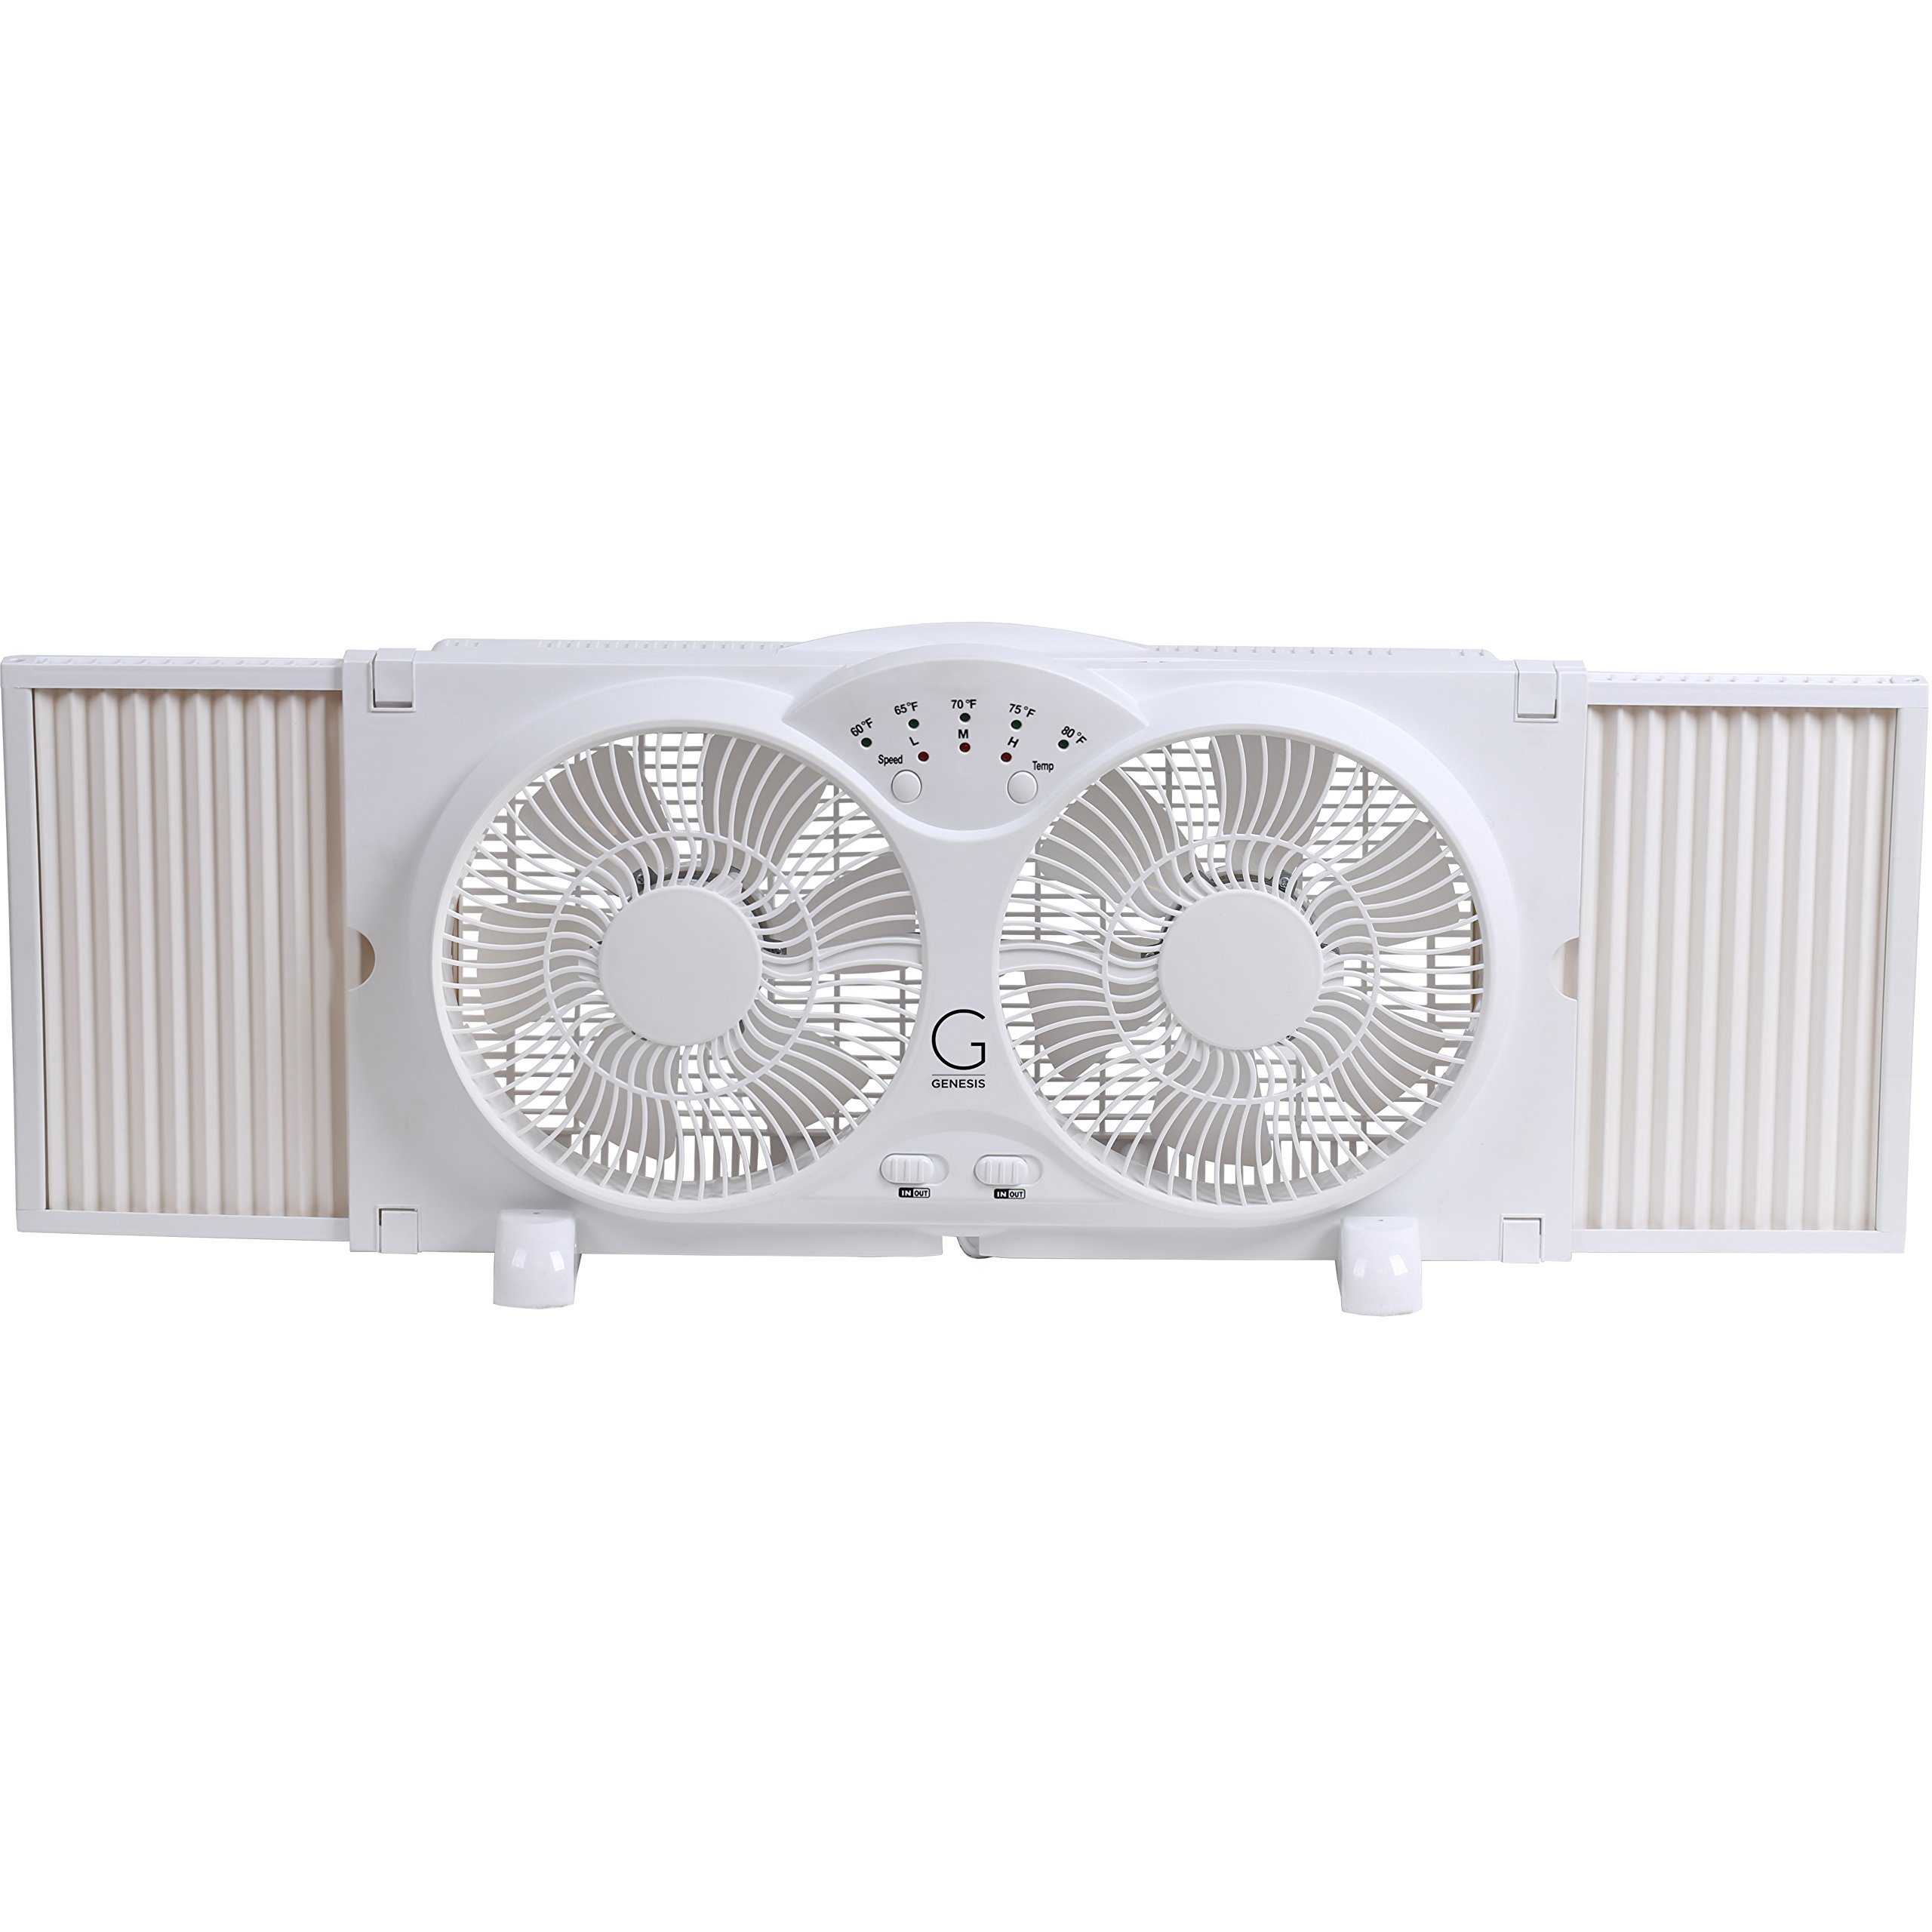 Genesis Twin Fan High Velocity Reversible AirFlow Fan, LED Indicator Lights Adjustable Thermostat & Max Cool Technology, ETL Certified, White (A1WINDOWFAN)